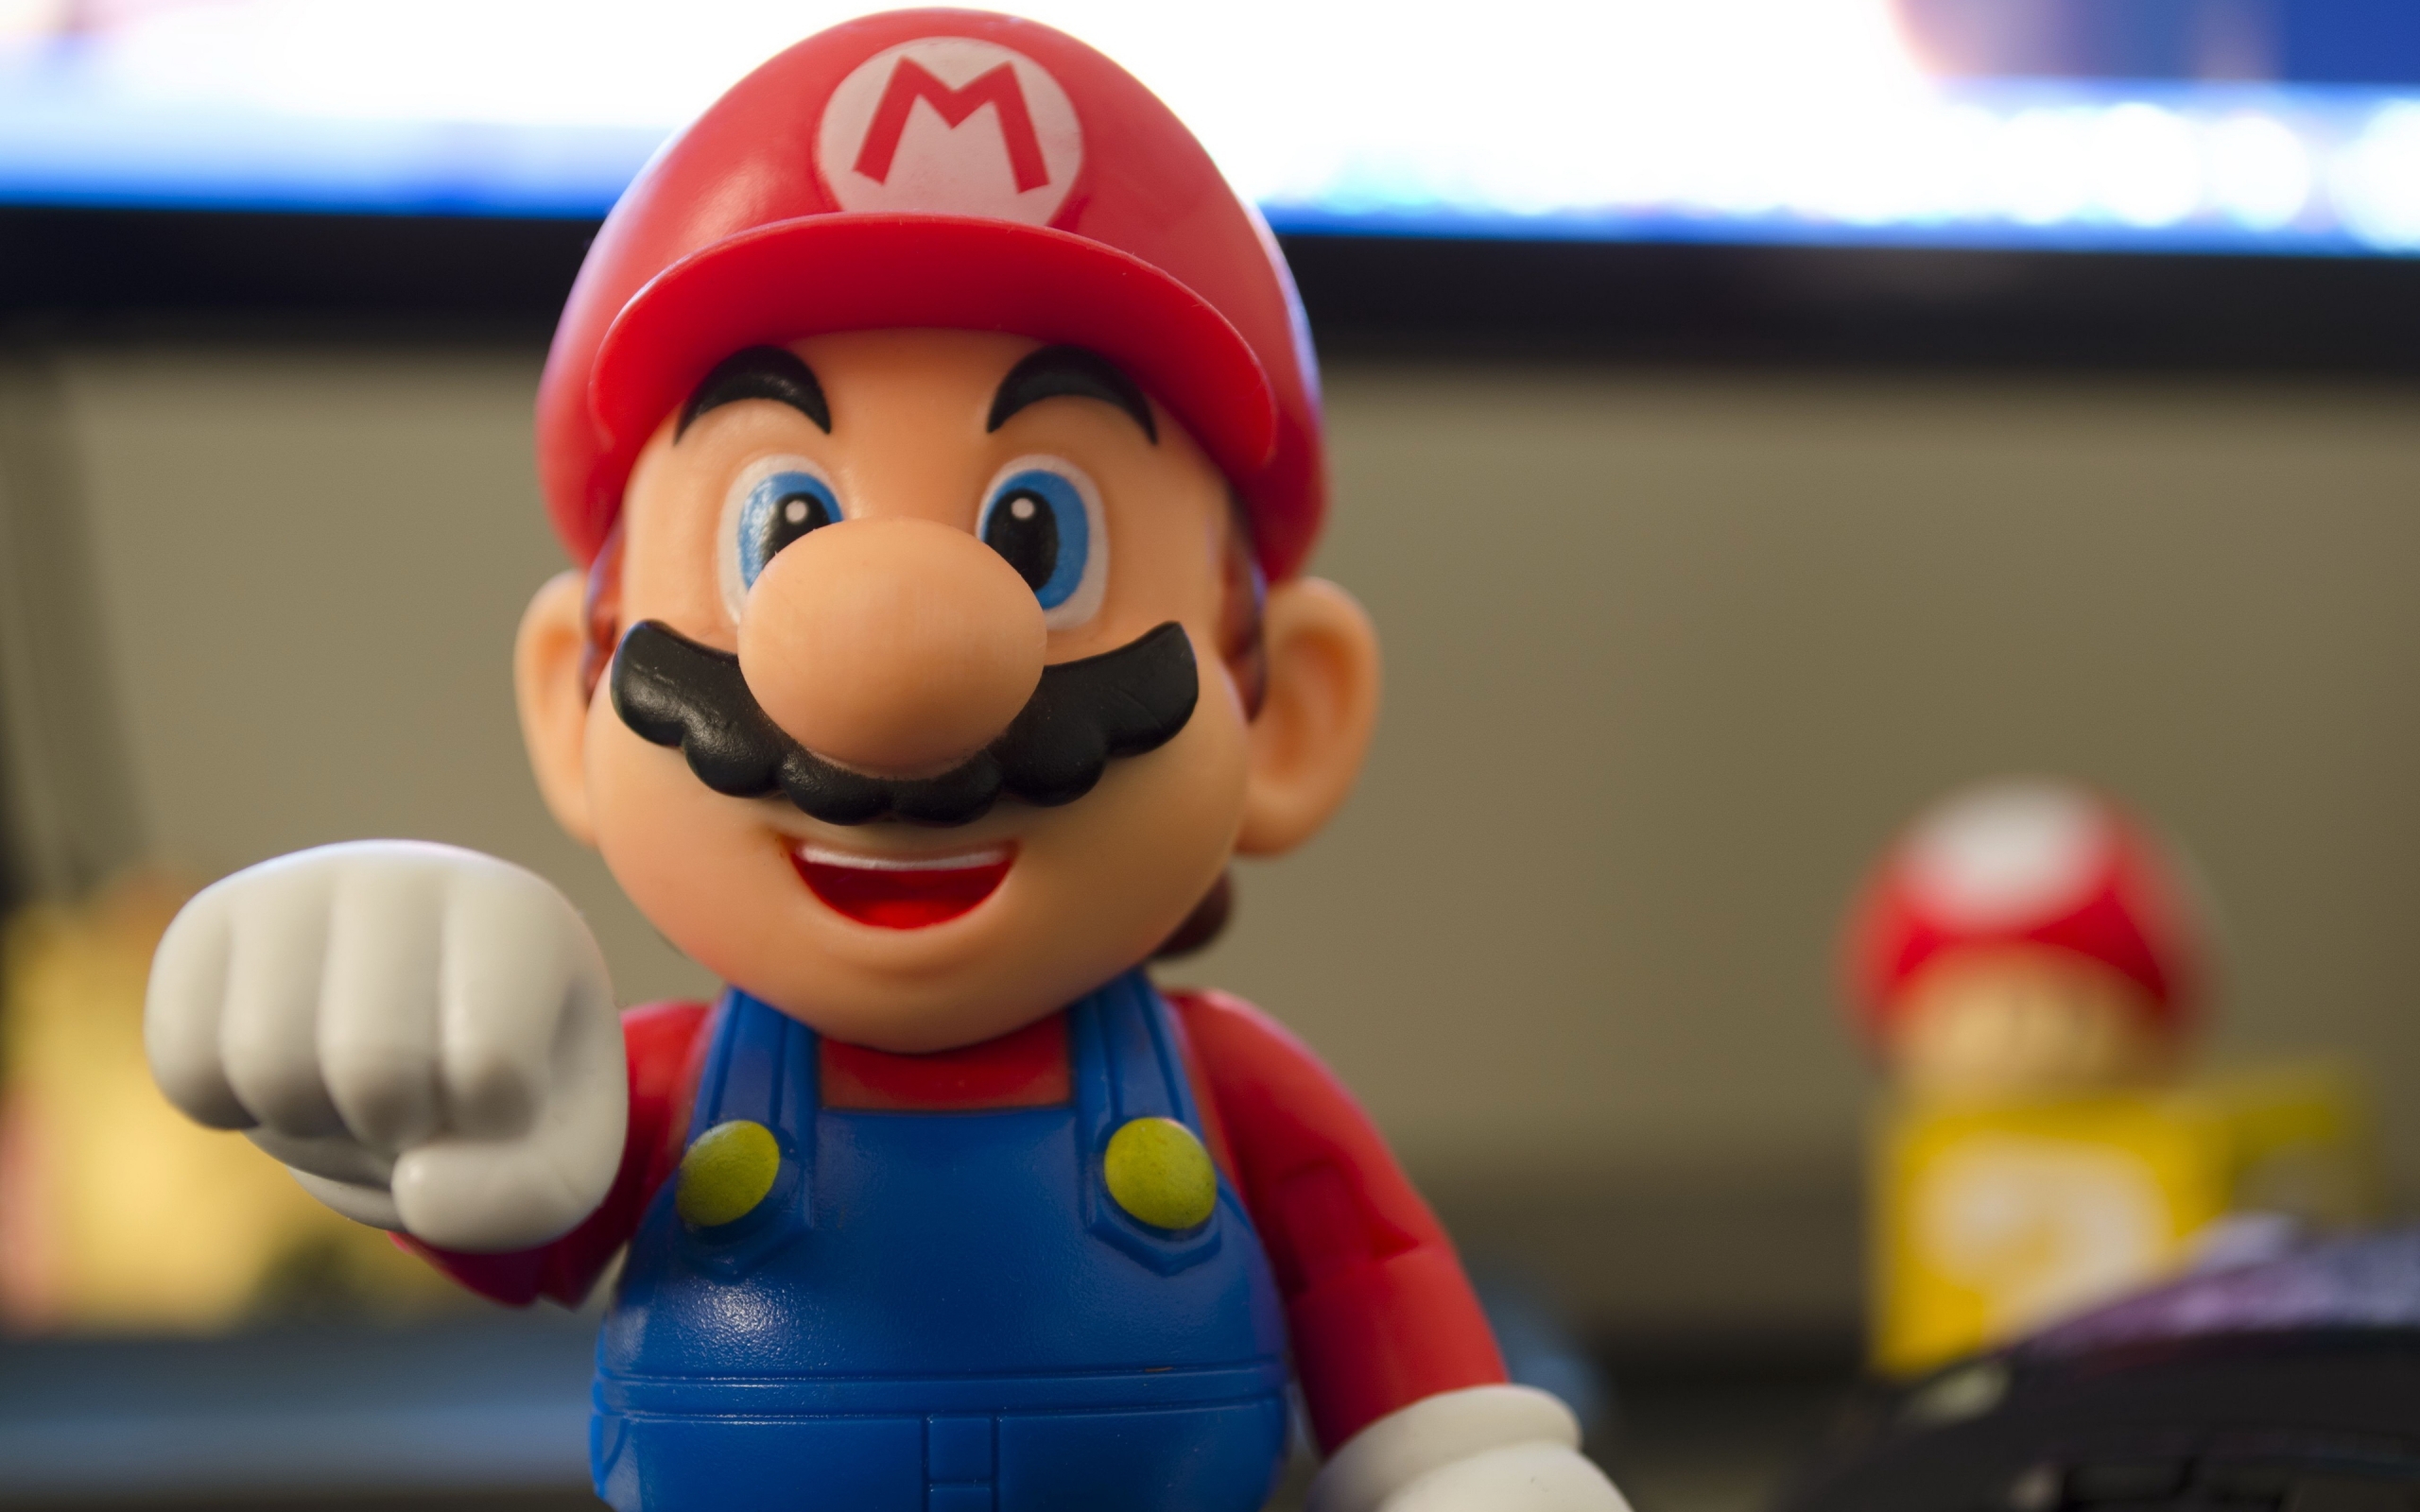 Super Mario Figurine for 2560 x 1600 widescreen resolution